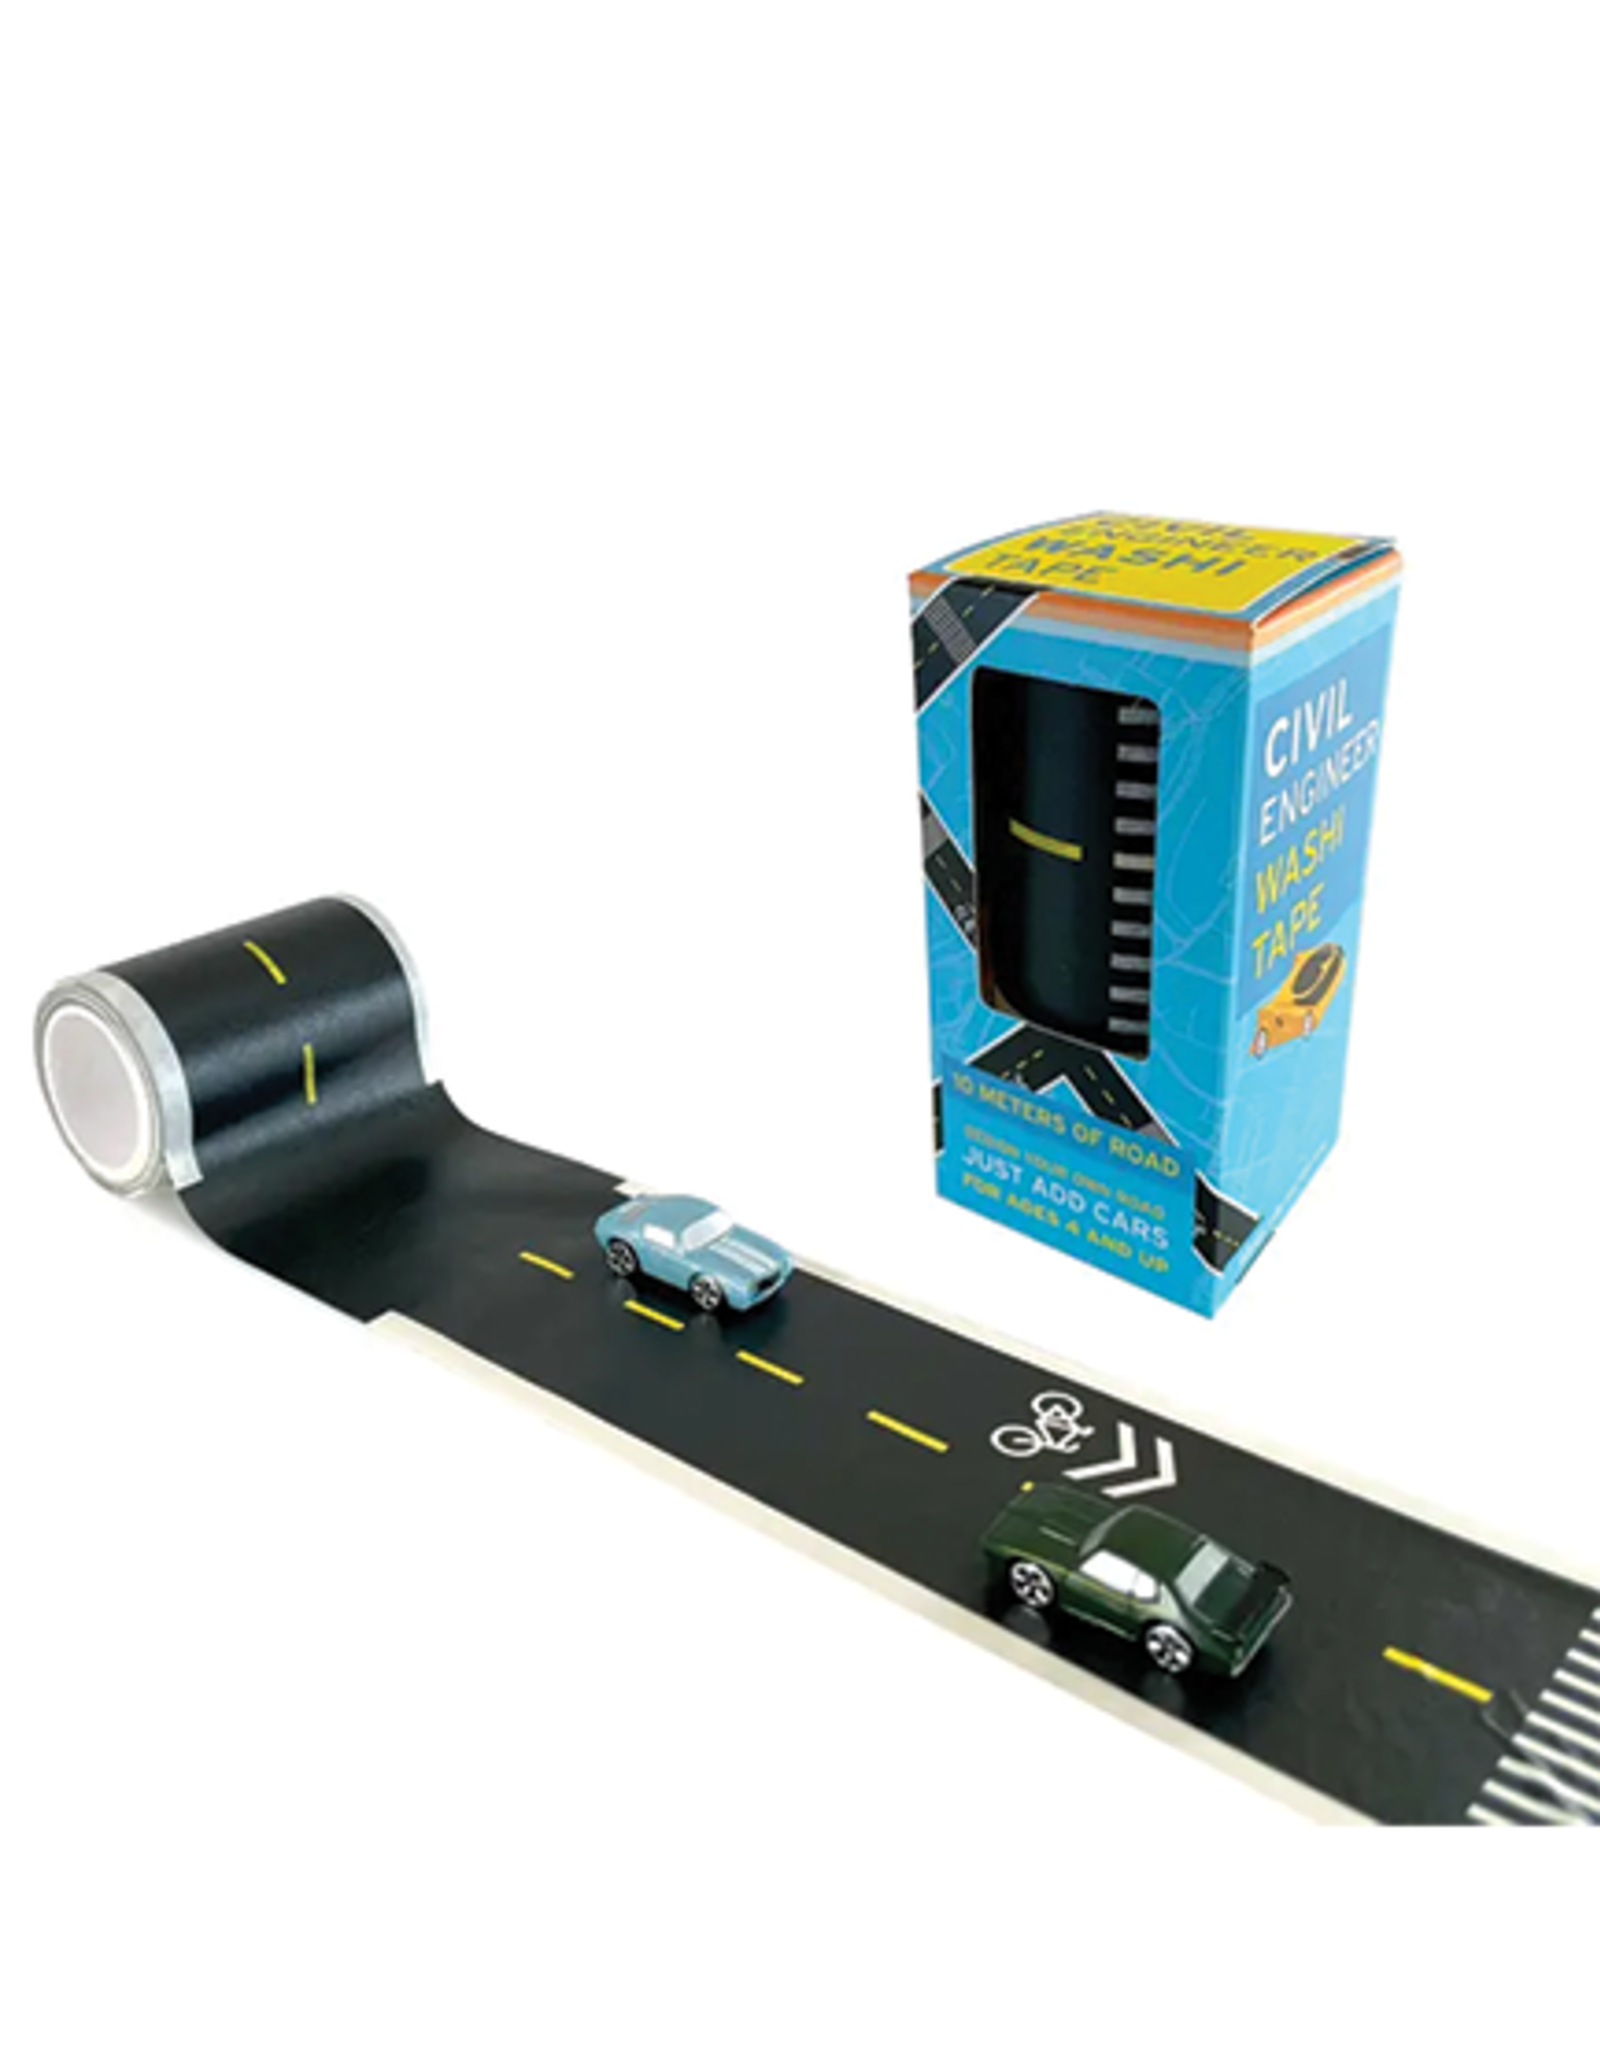 Copernicus Toys Civil Engineer Washi Road Tape